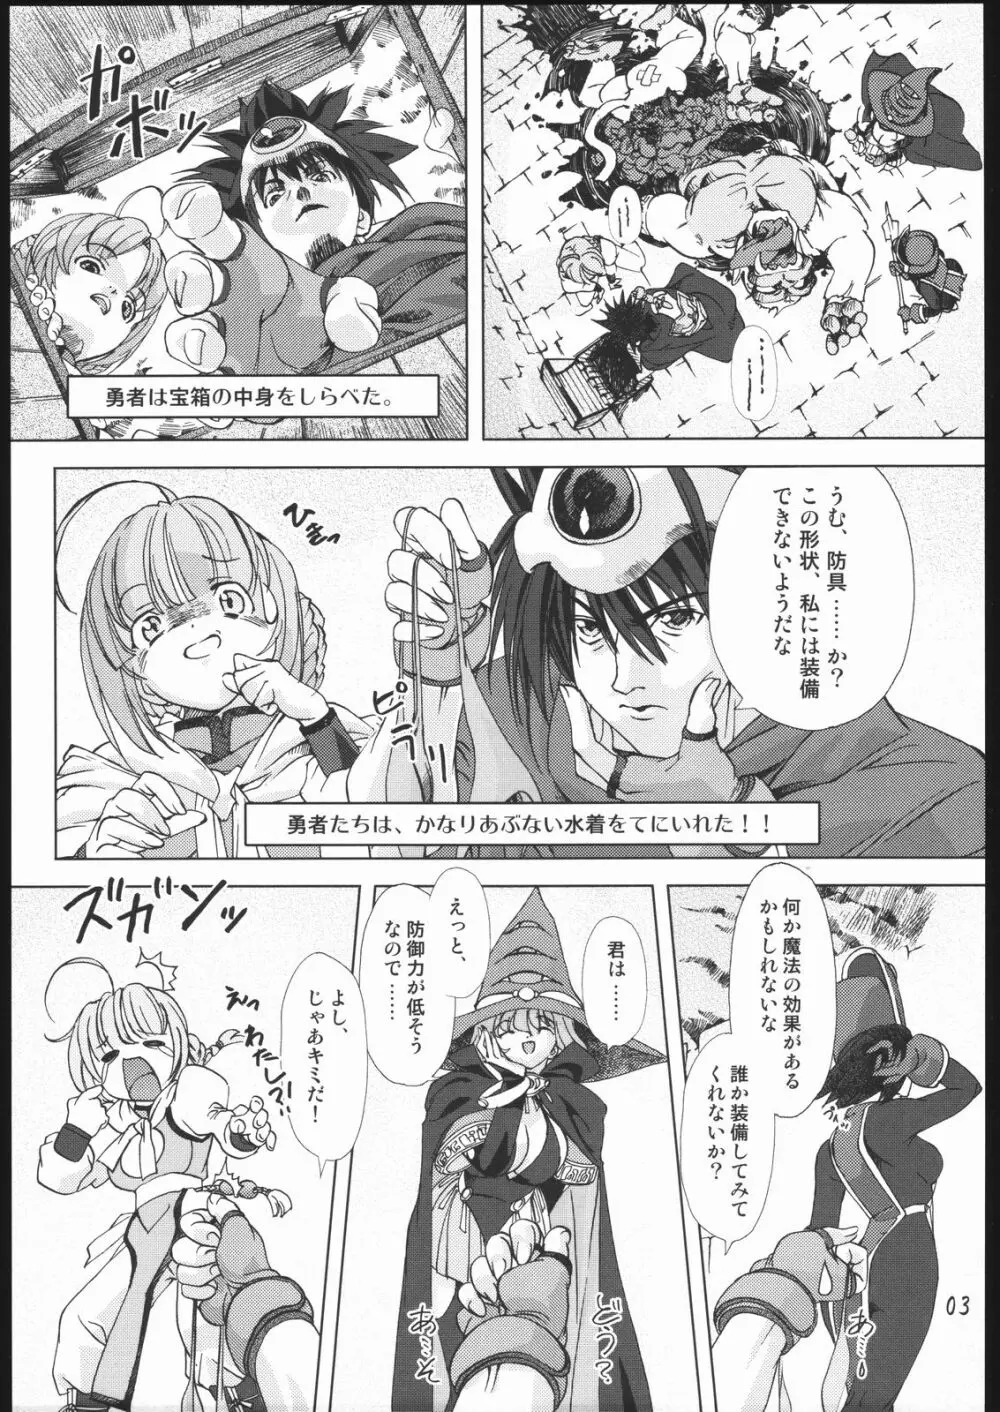 武闘家vs. - page2